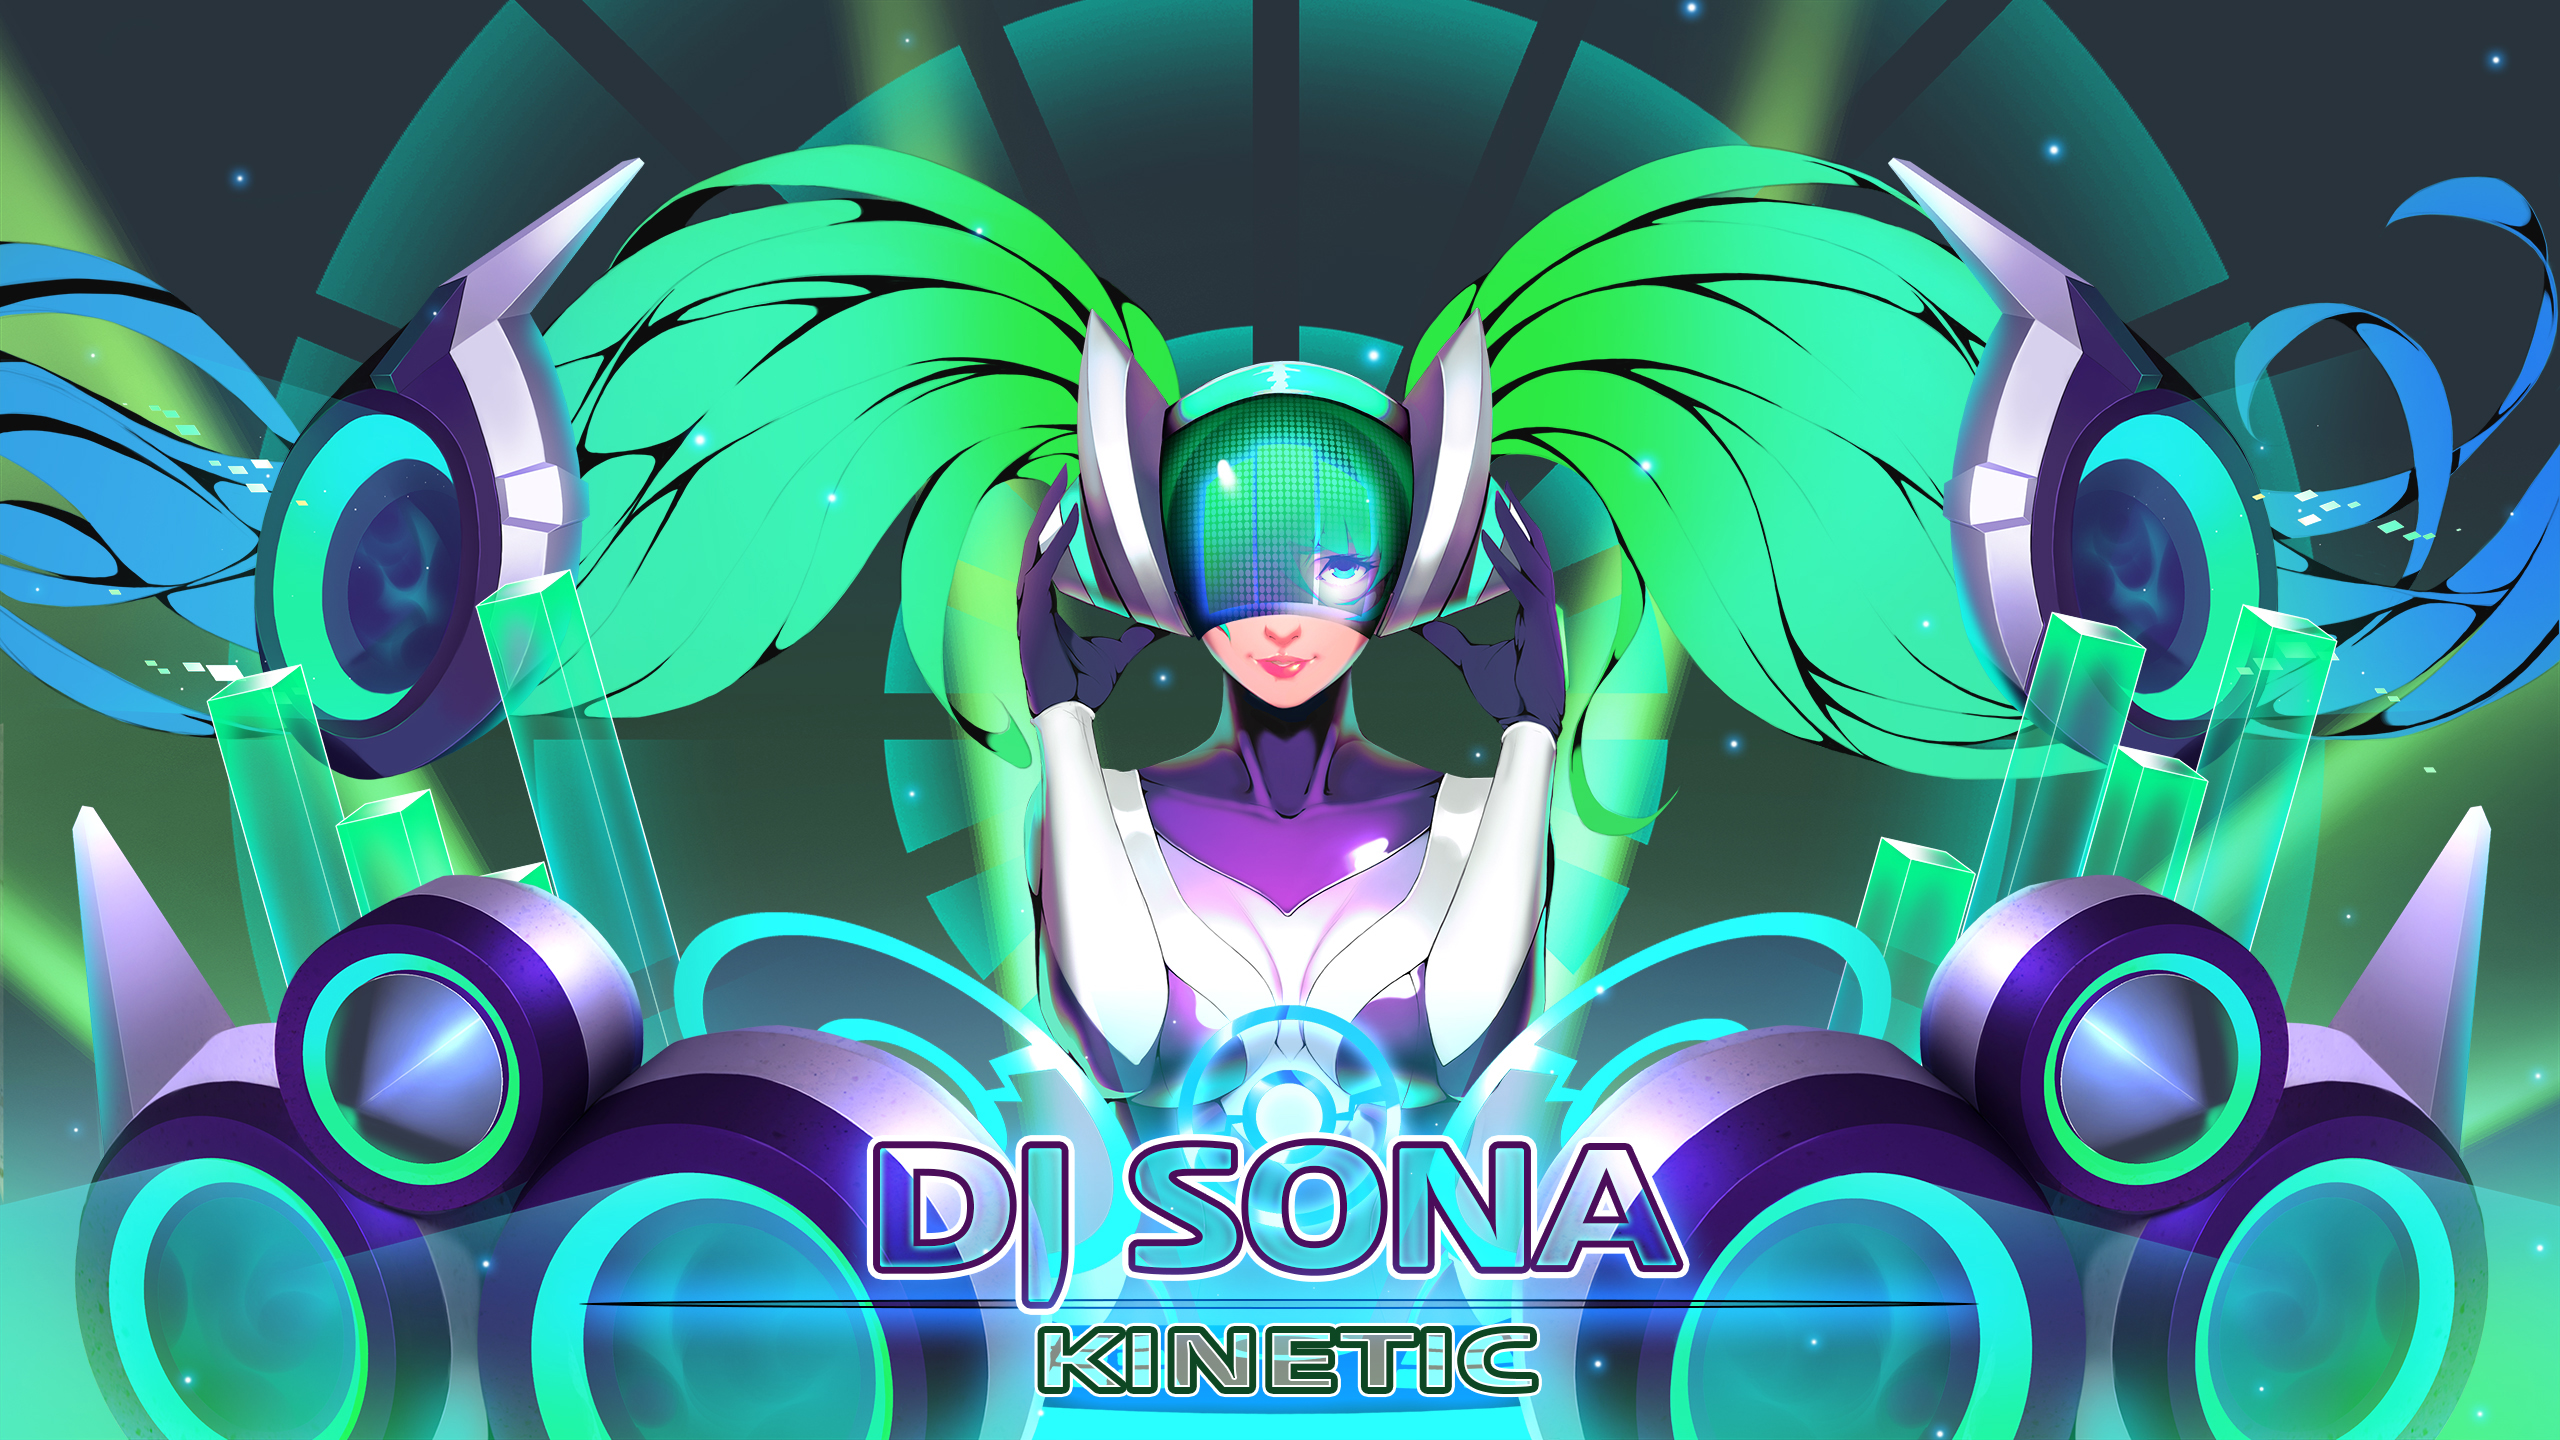 Sona League Of Legends DJ Sona 2560x1440